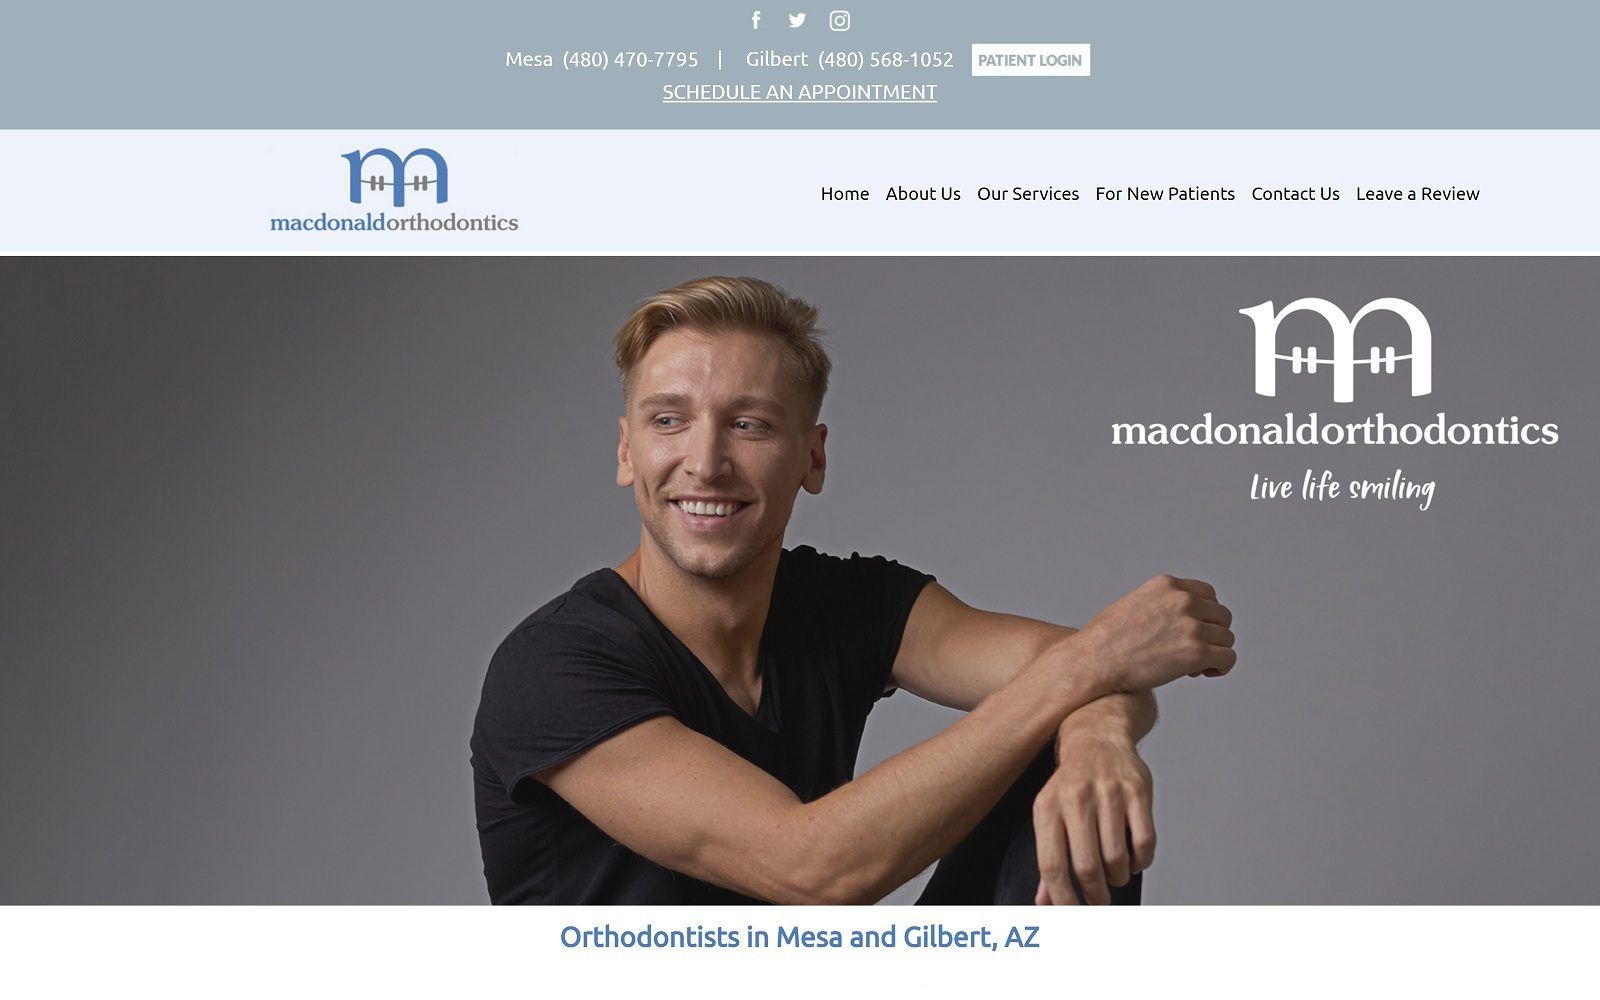 The screenshot of macdonald orthodontics website